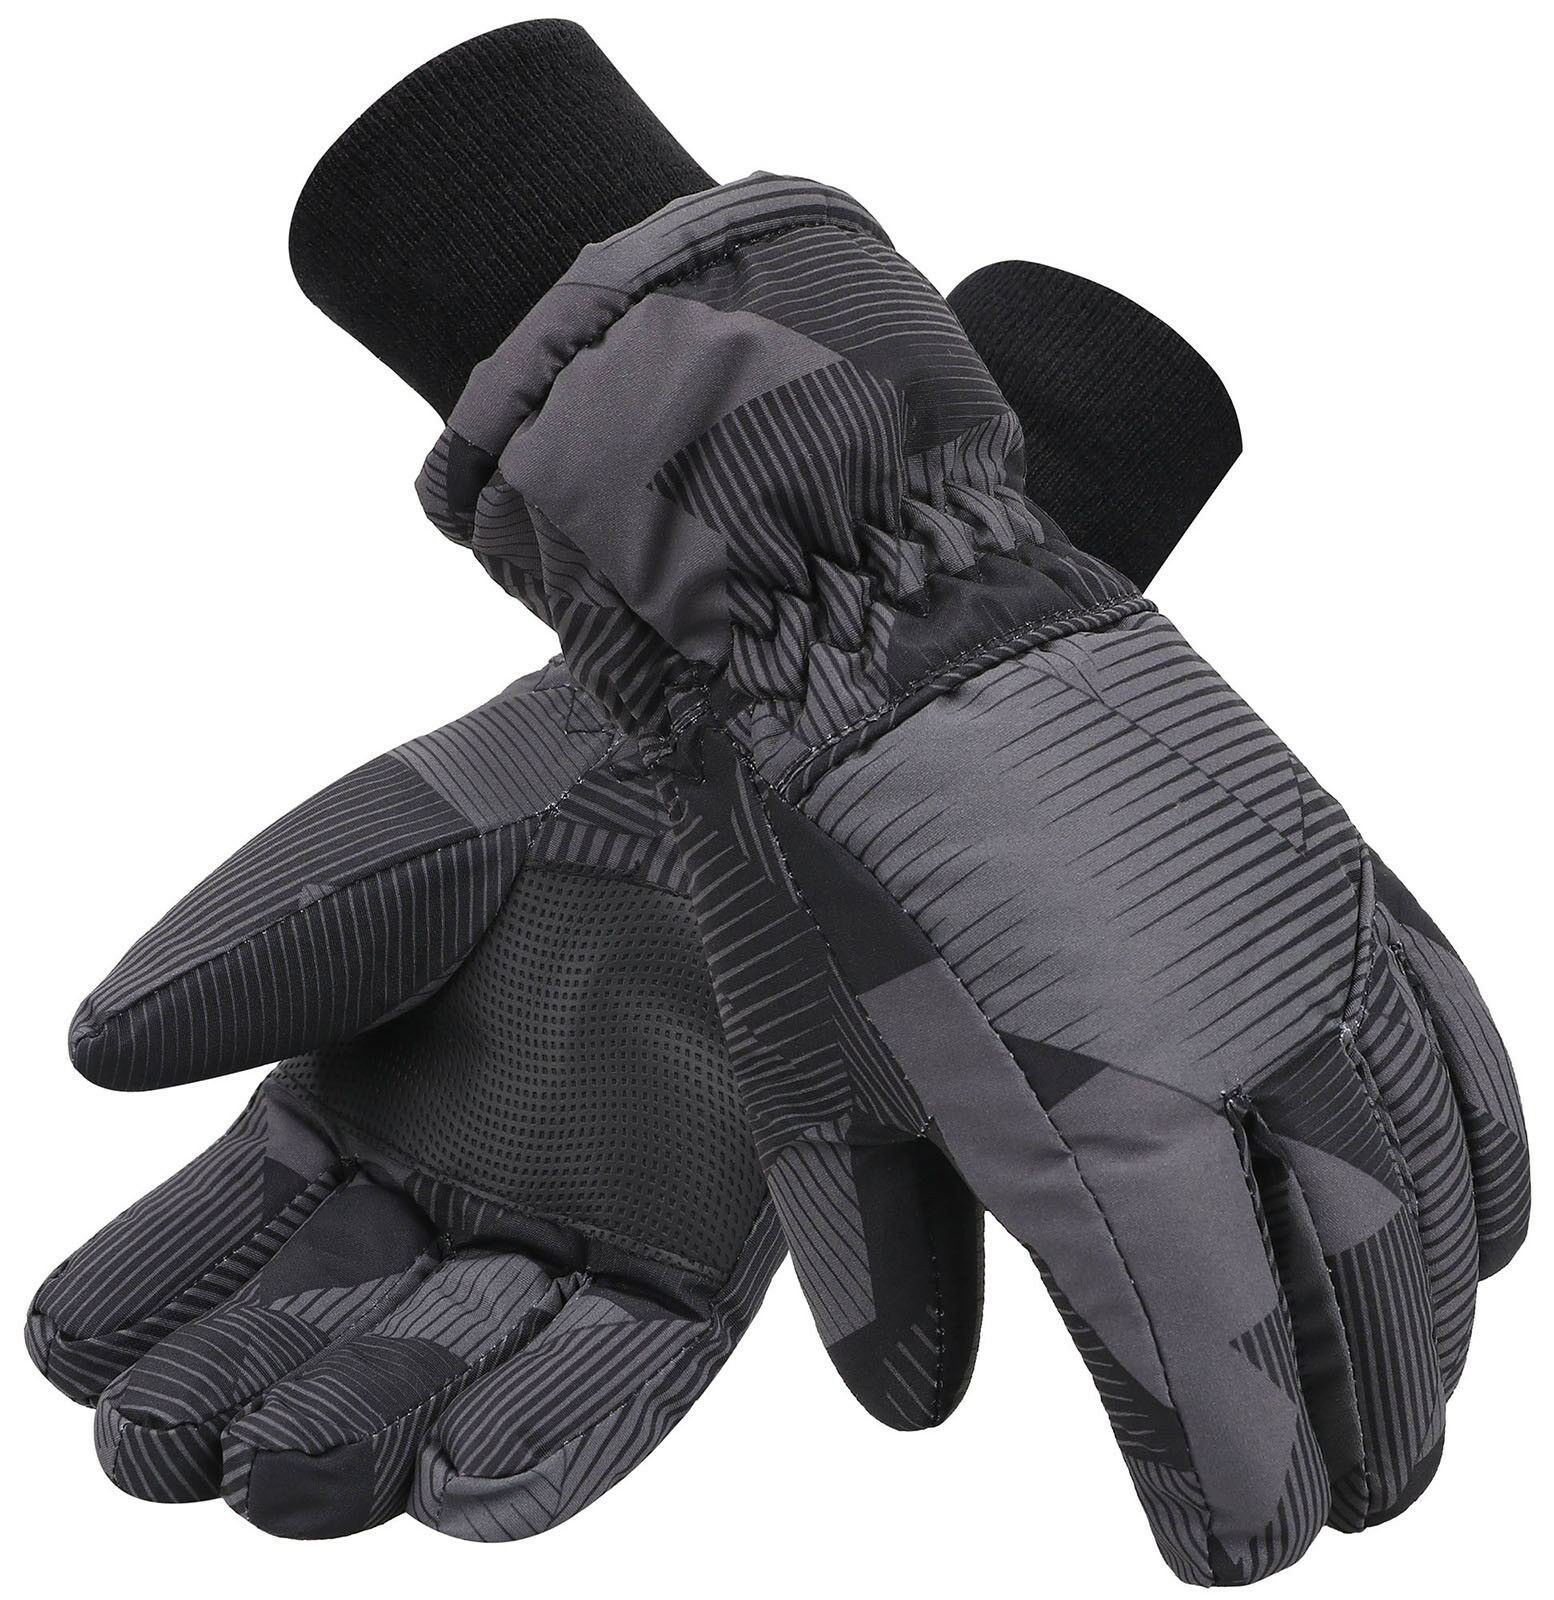 New Boys Kids 3m Thinsulate Waterproof Ski Gloves Winter Sport Warm Snow Mittens